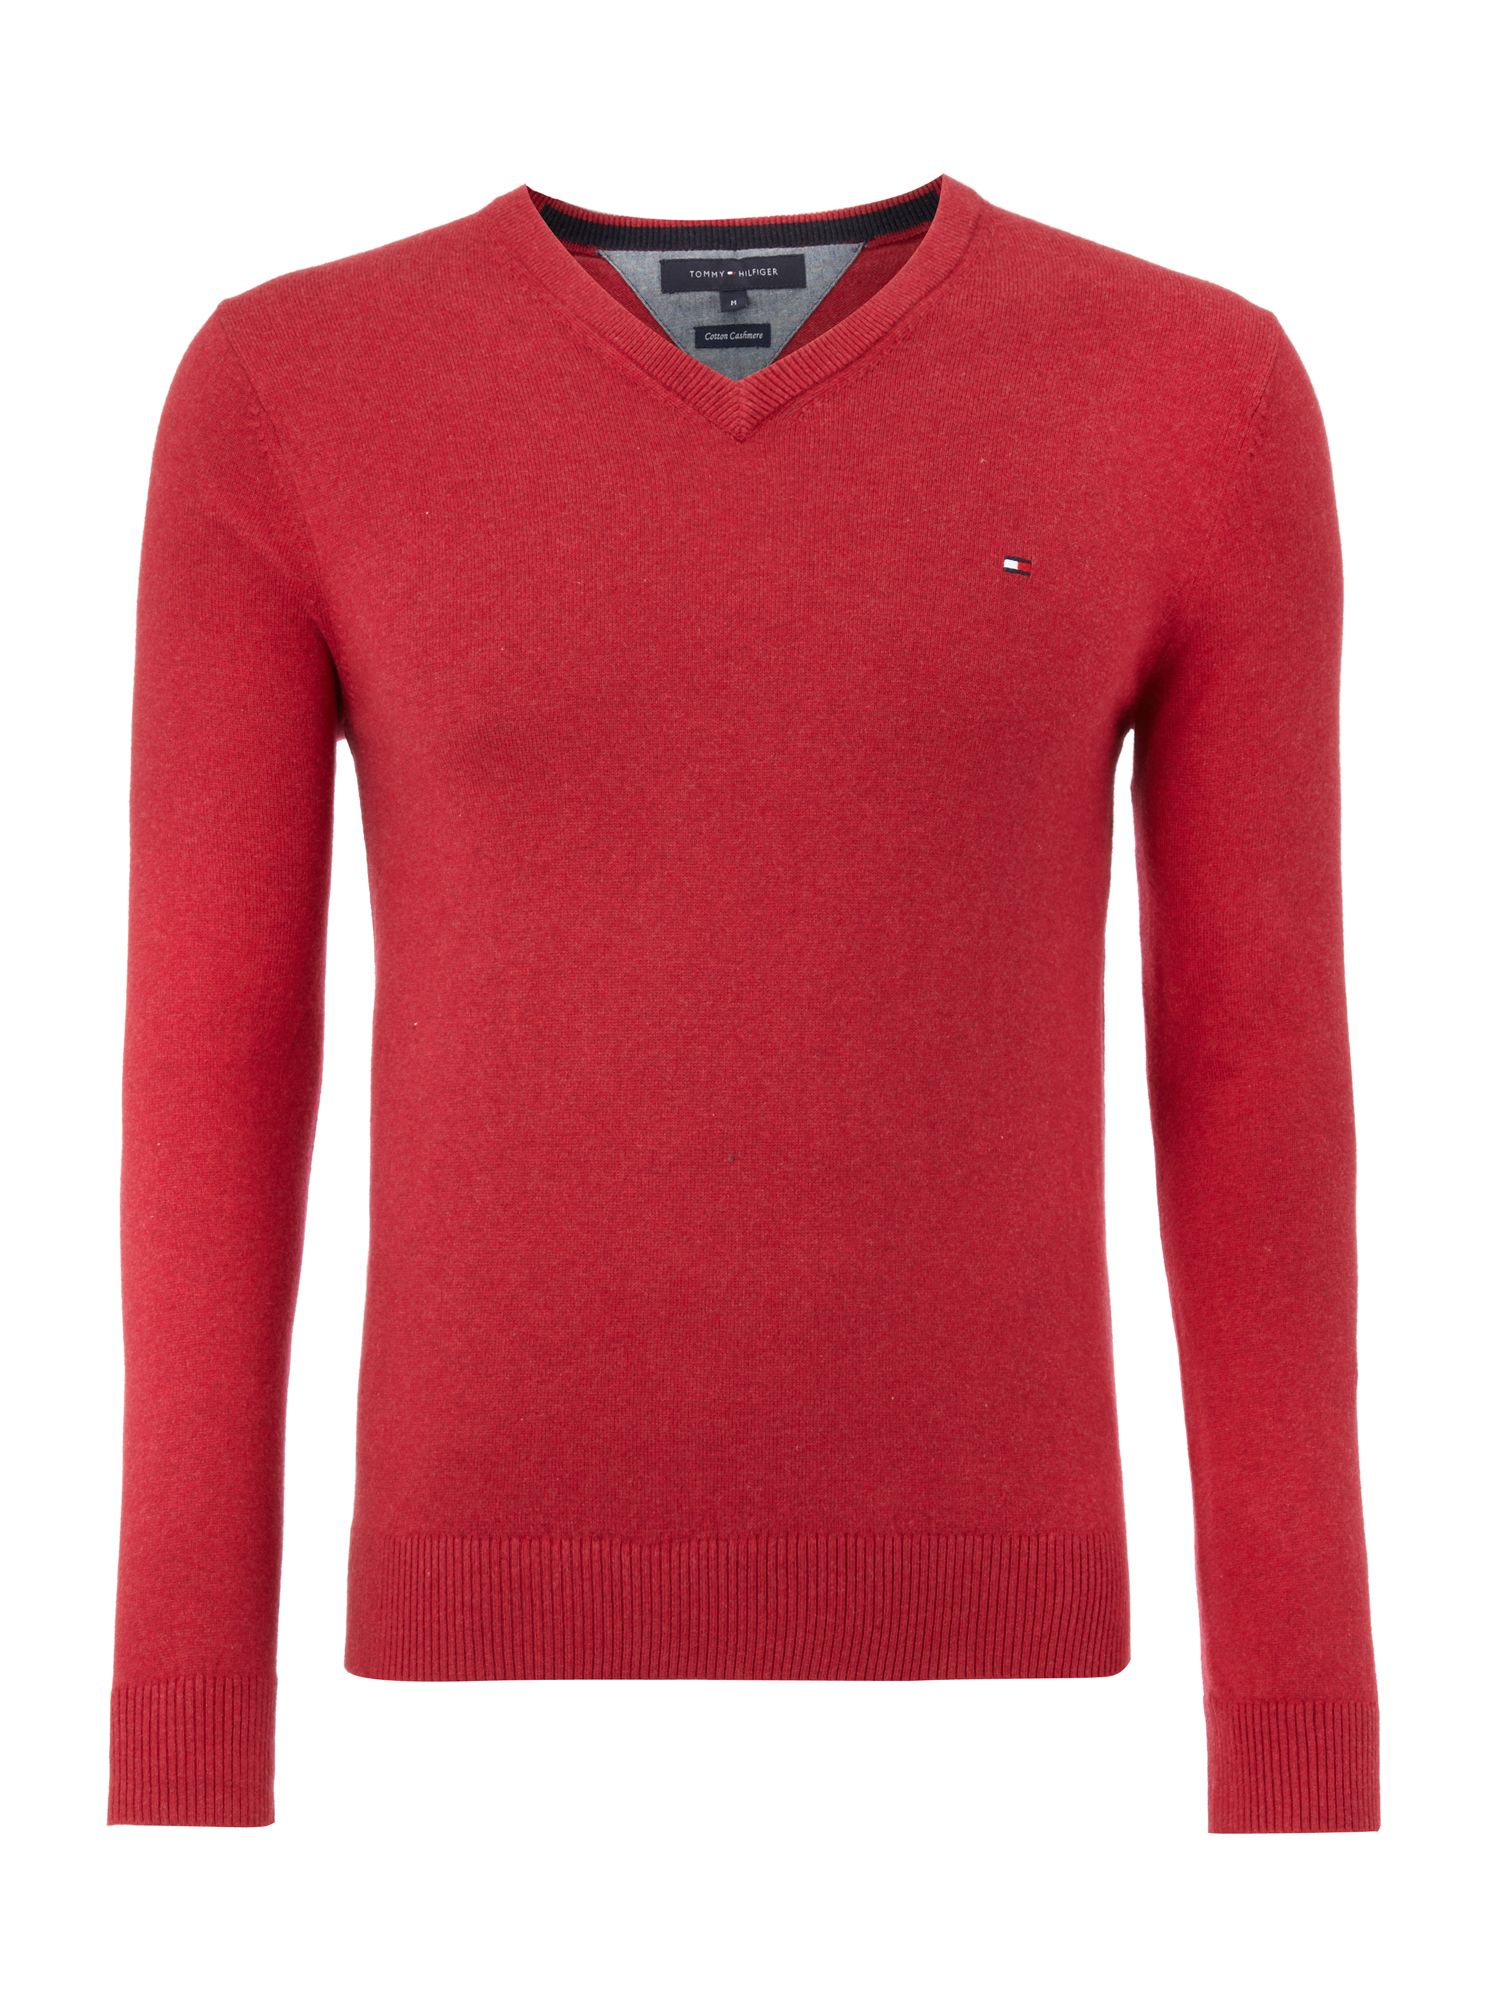 Tommy Hilfiger Cotton Cashmere Vneck Sweater in Red for Men | Lyst